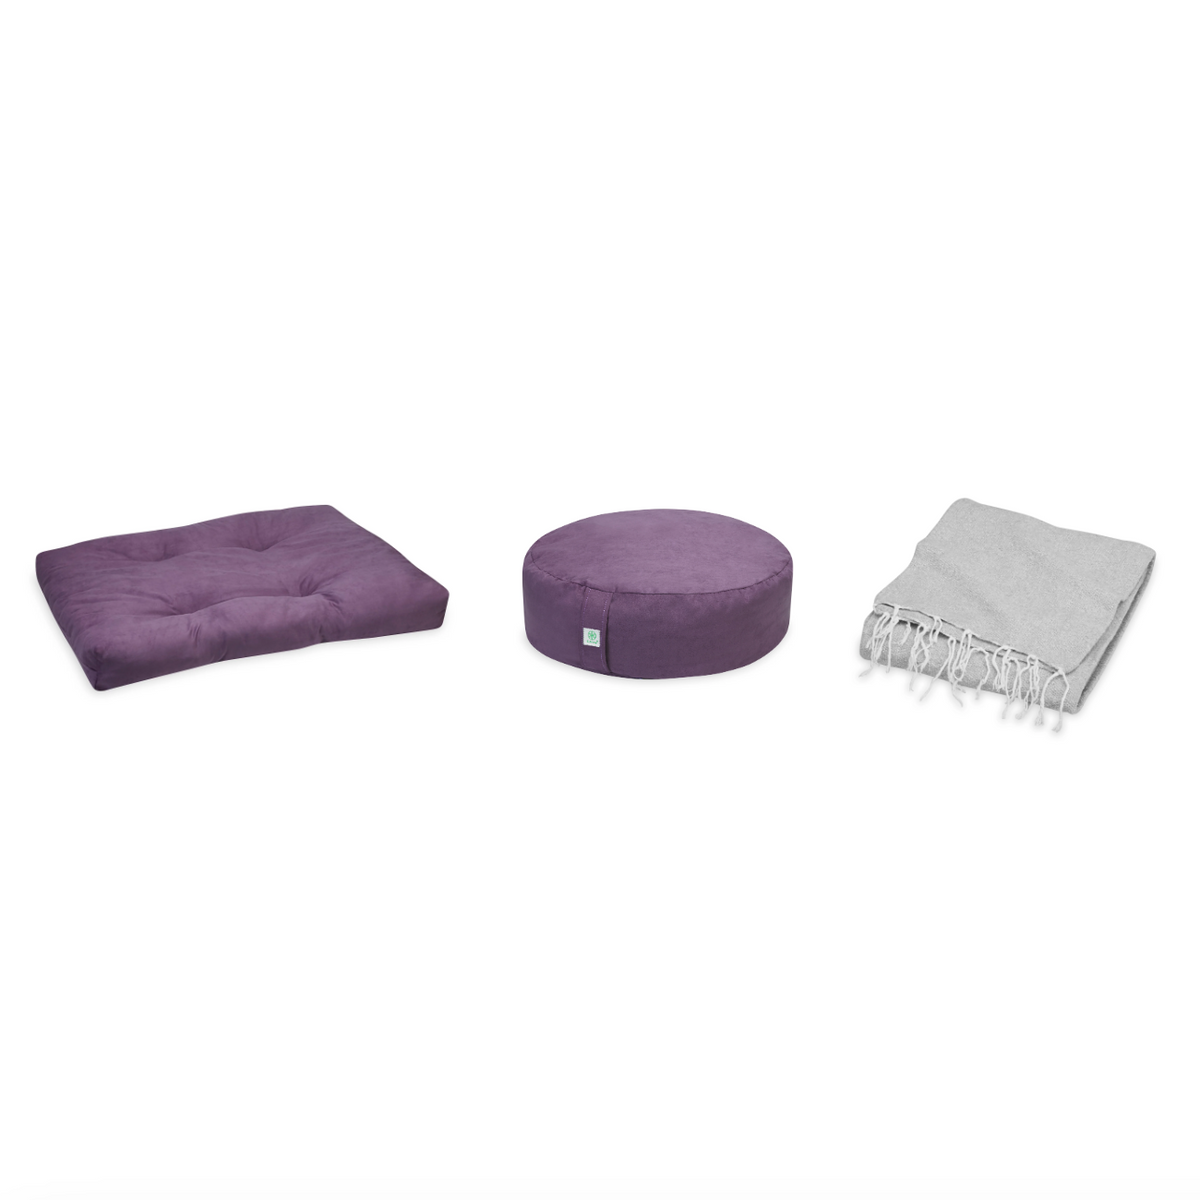 Meditation Bundle - Zabuton (Purple), Zafu (Purple), Blanket (Grey)